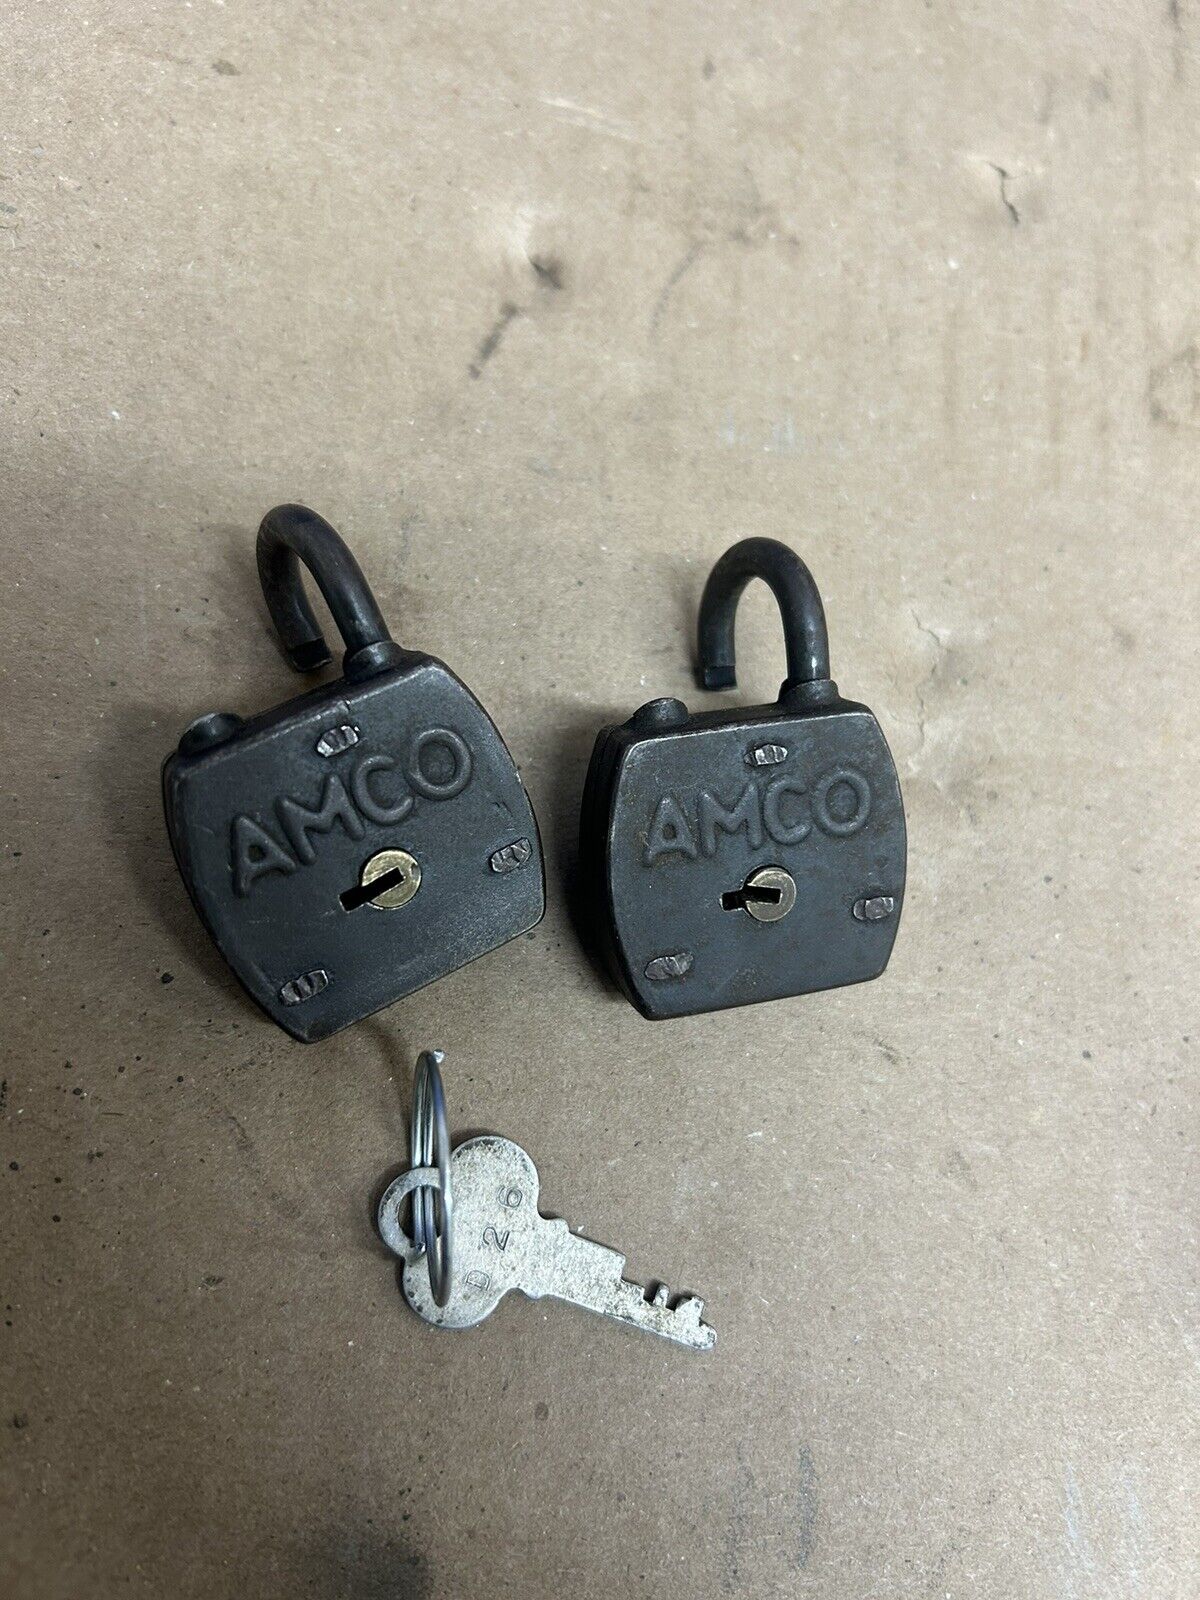 2 Working AMCO padlocks locks with key for vintage gumball peanut machines